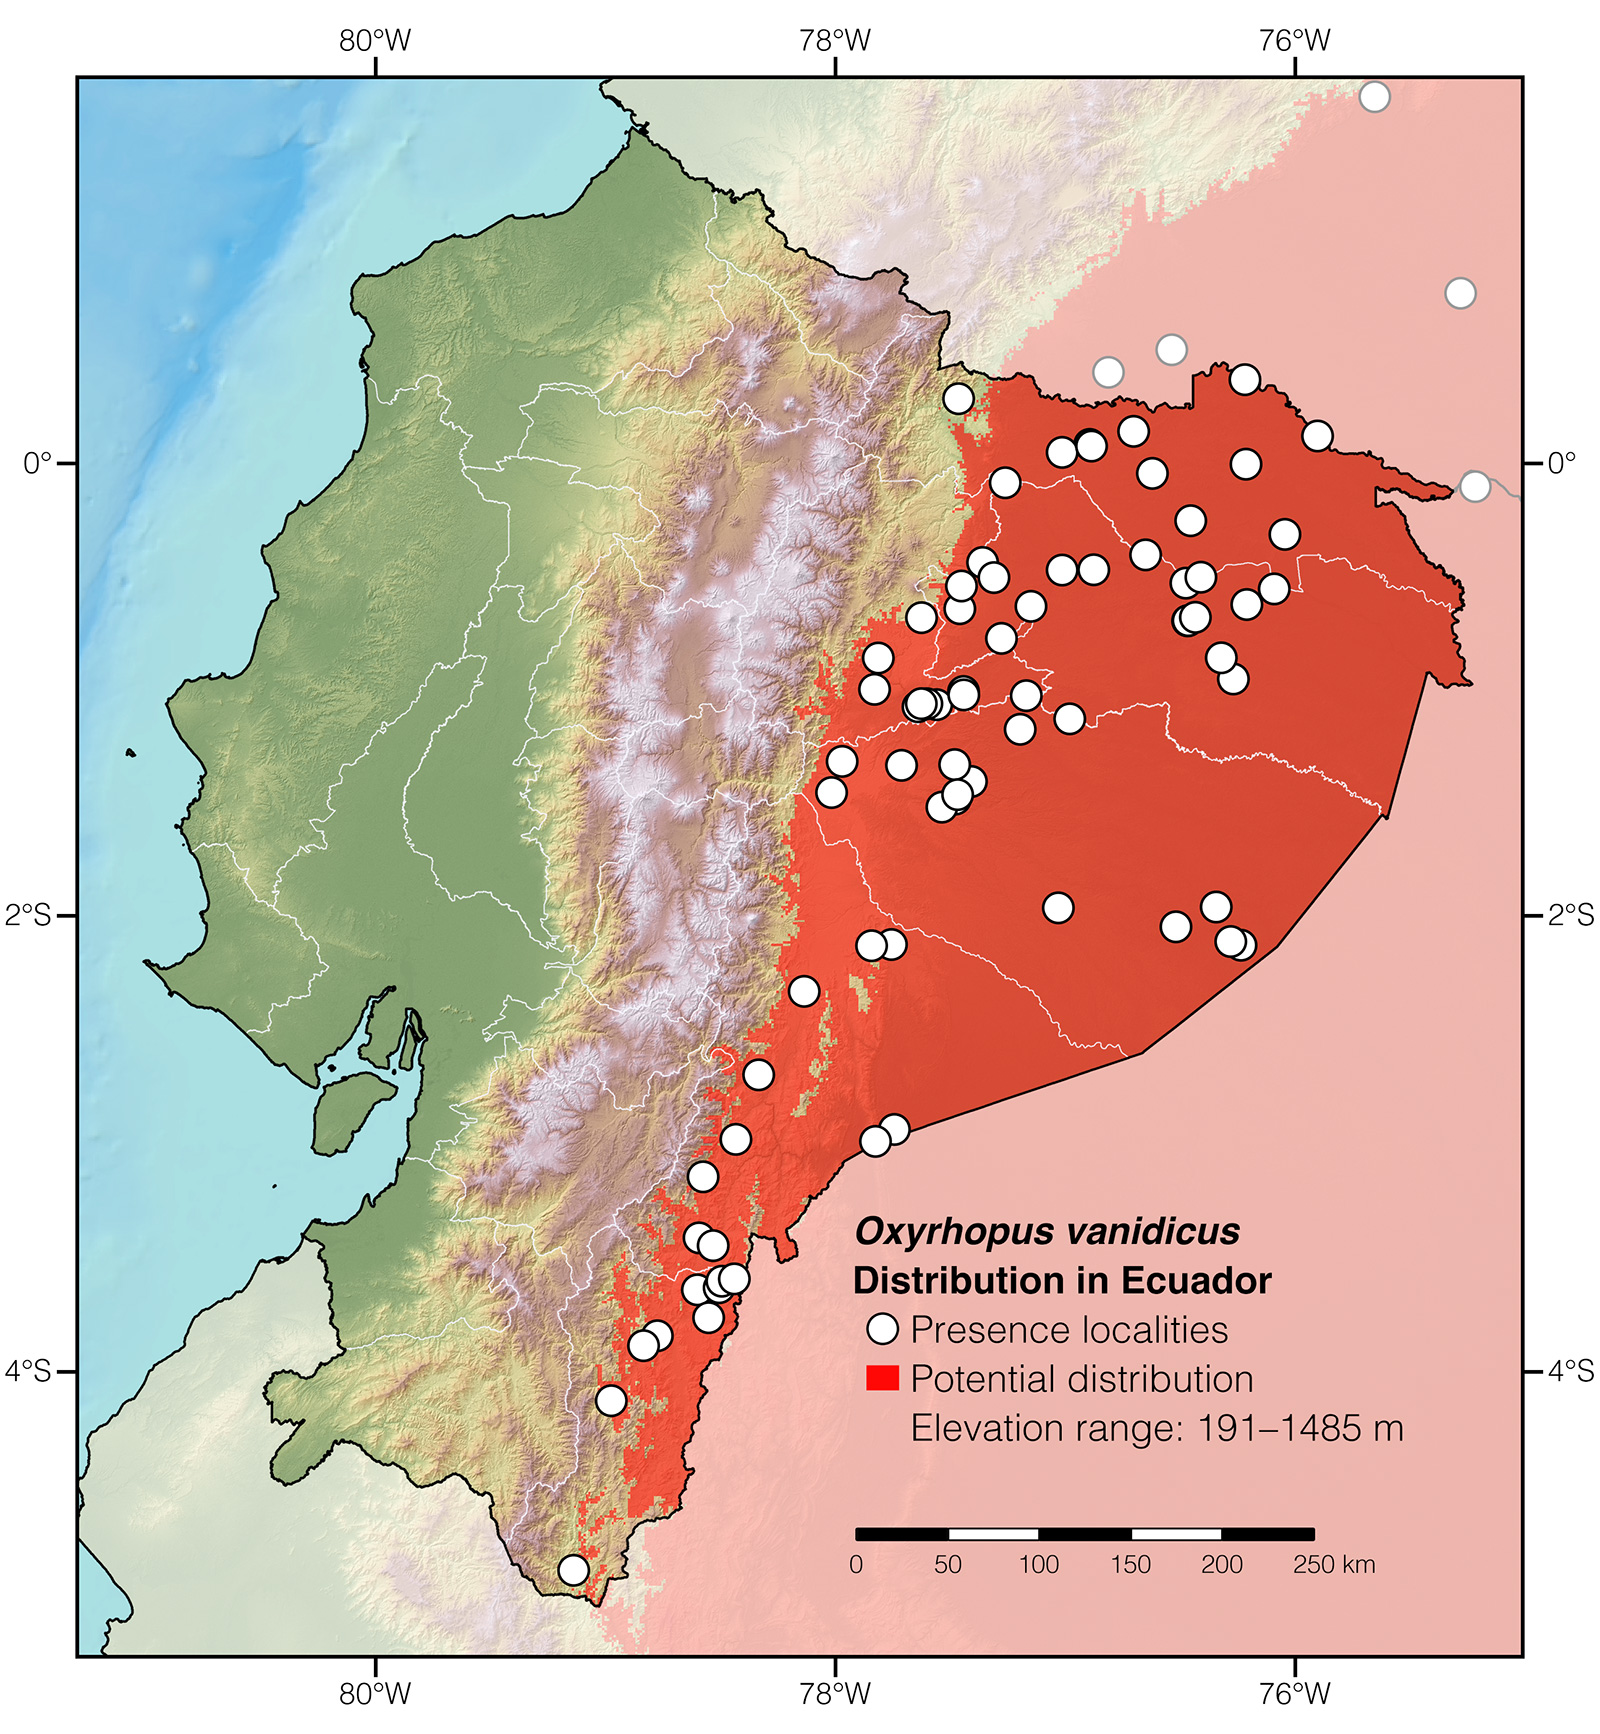 Distribution of Oxyrhopus vanidicus in Ecuador